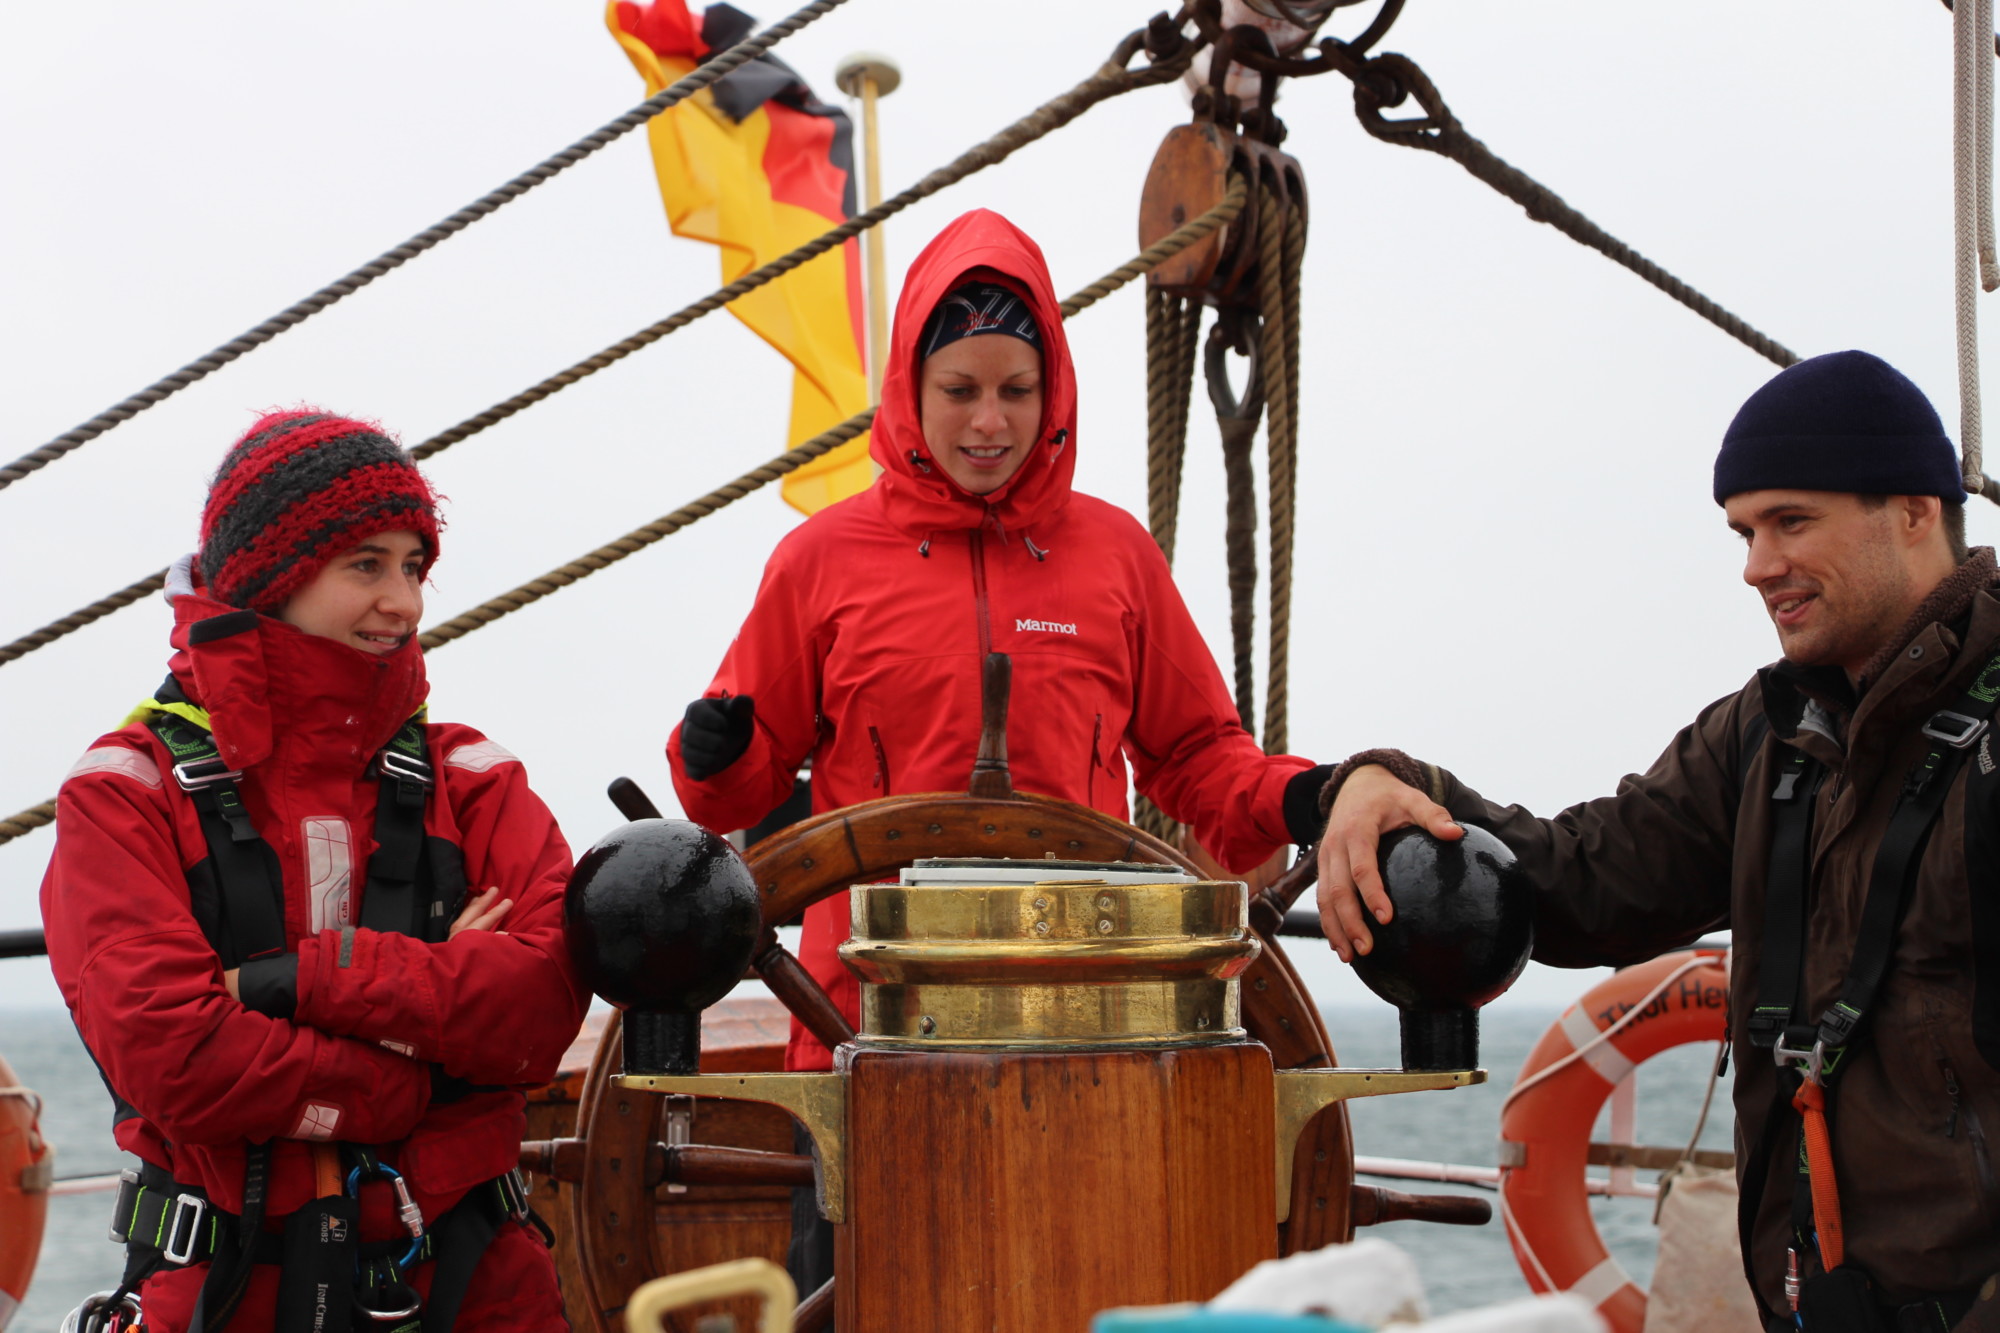 Daniela Karst am Ruder der Thor Heyerdahl (Bild: Johanna Grzywotz)